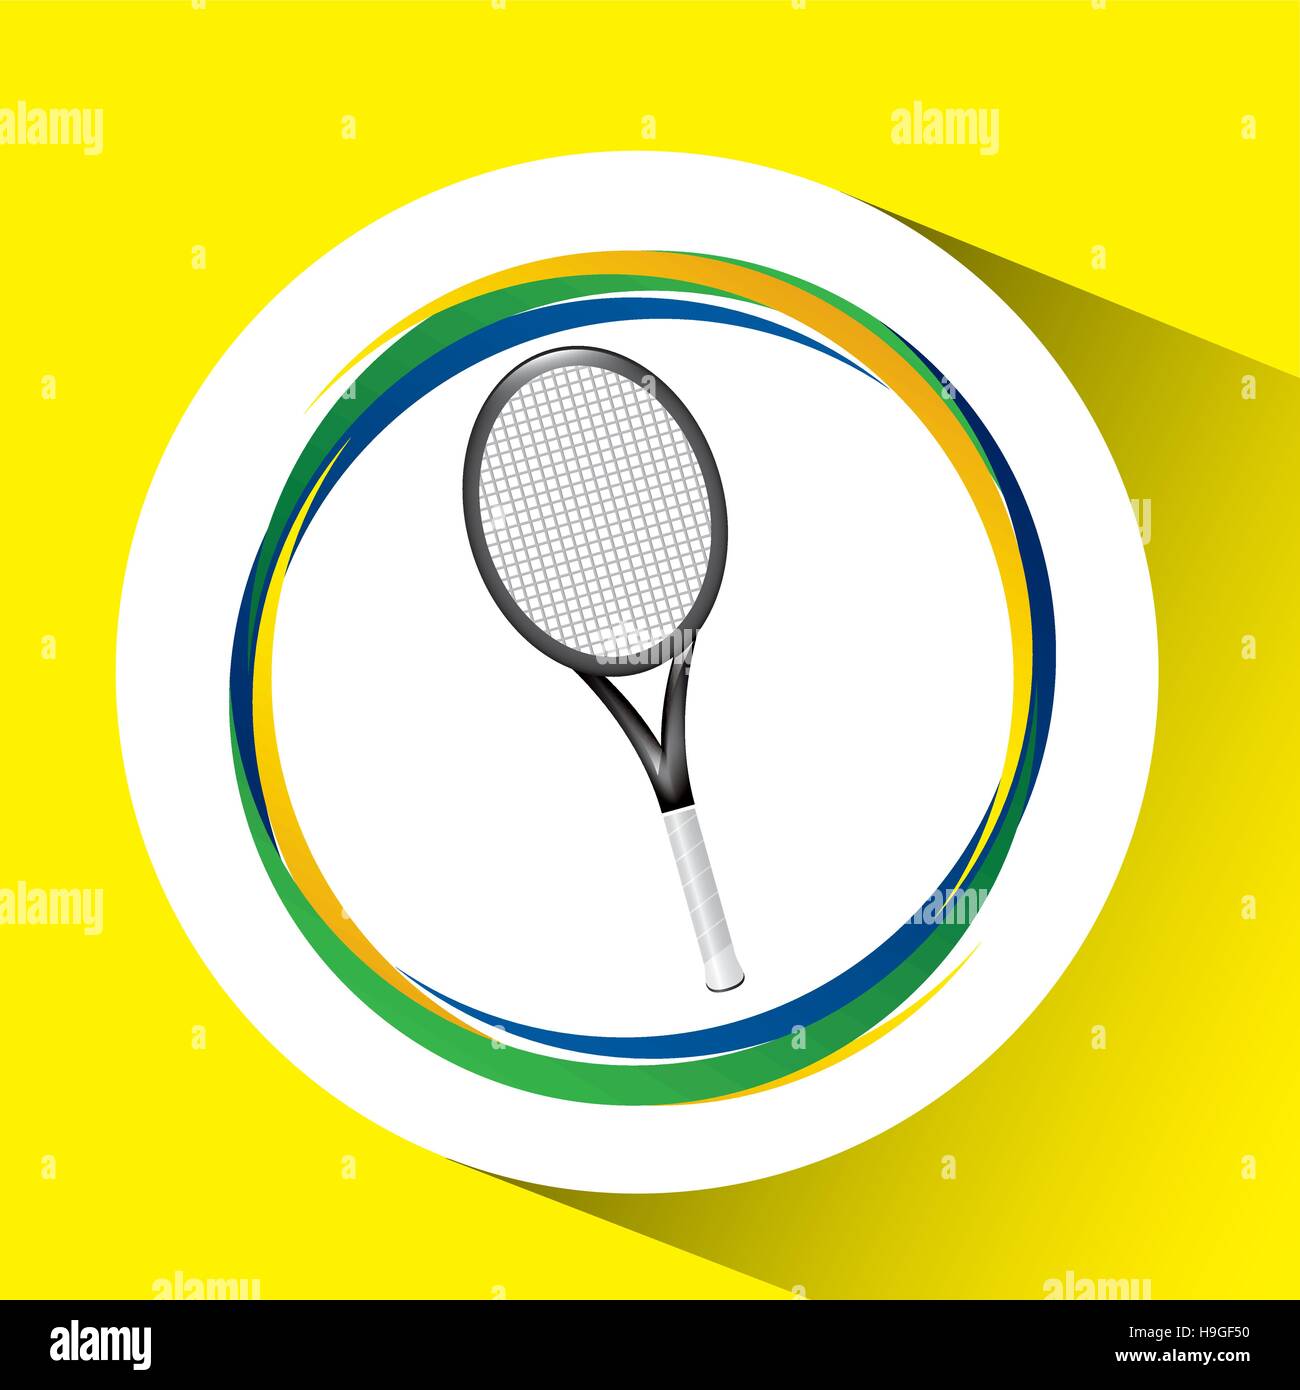 Tennisschläger Tennis Olympiade brasilianische Flagge Farben Vektor Illustration Eps 10 Stock Vektor